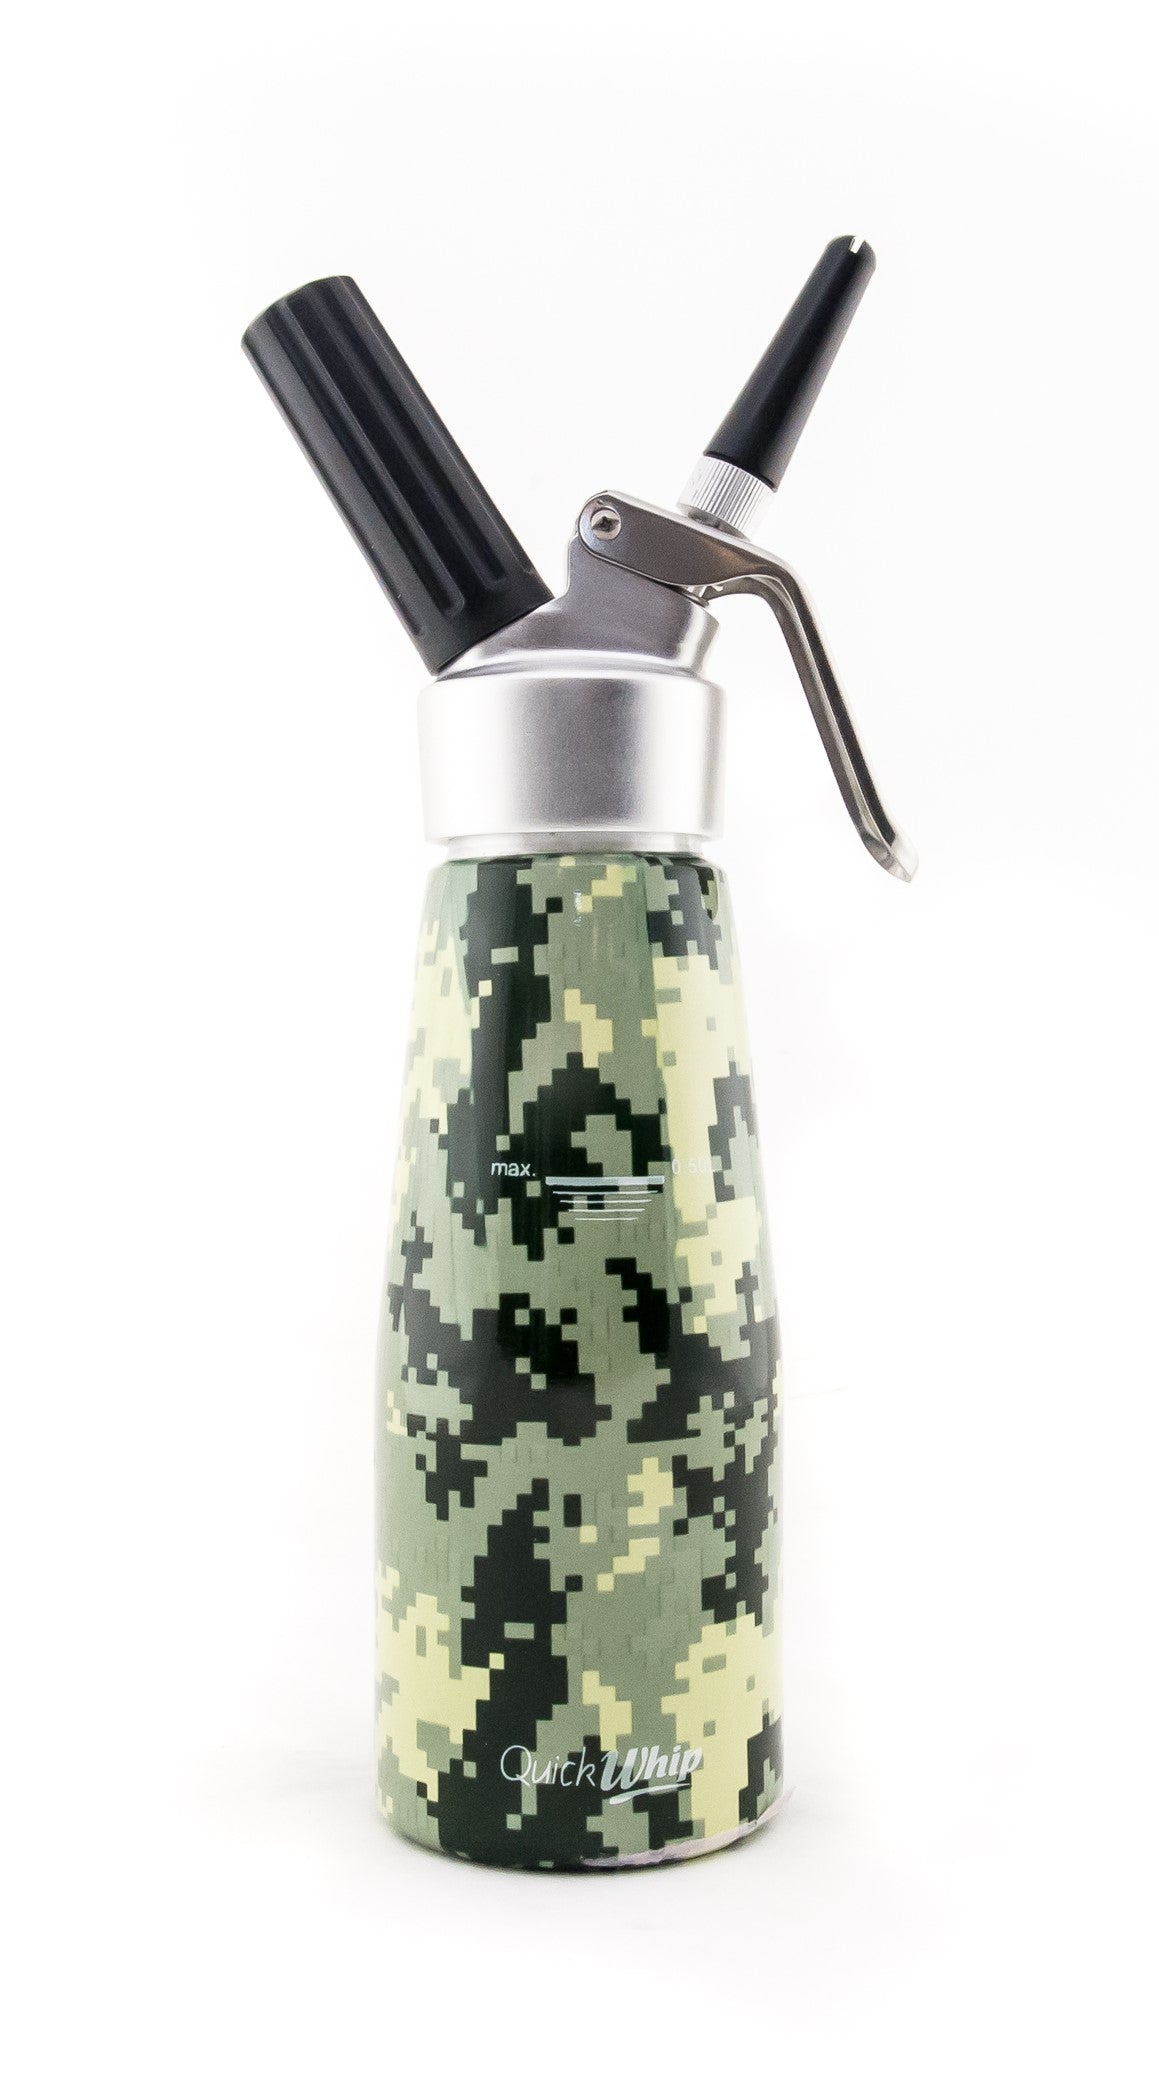 Army print dispenser for whipped cream